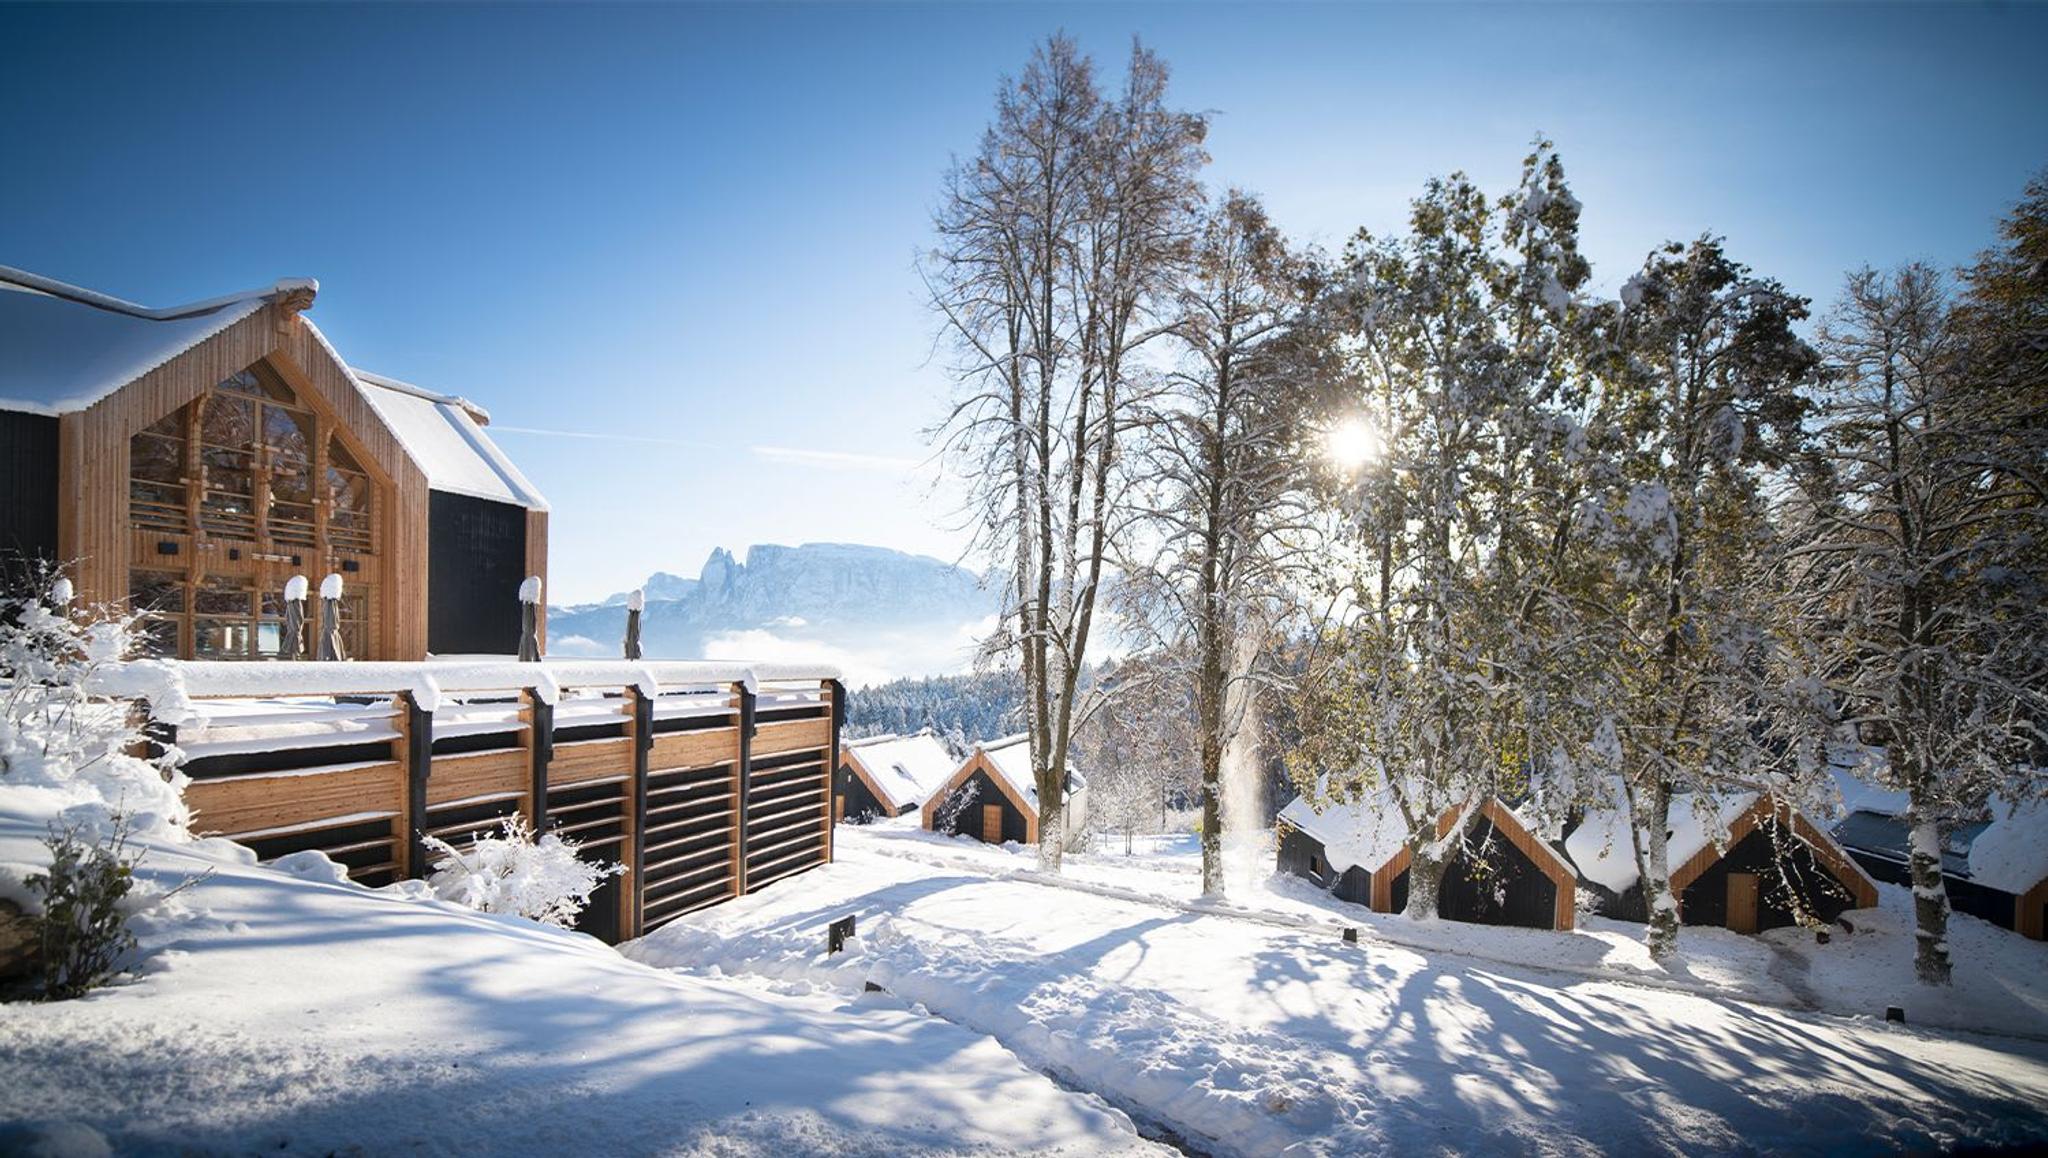 Adler Lodge Ritten: Relax nella Neve